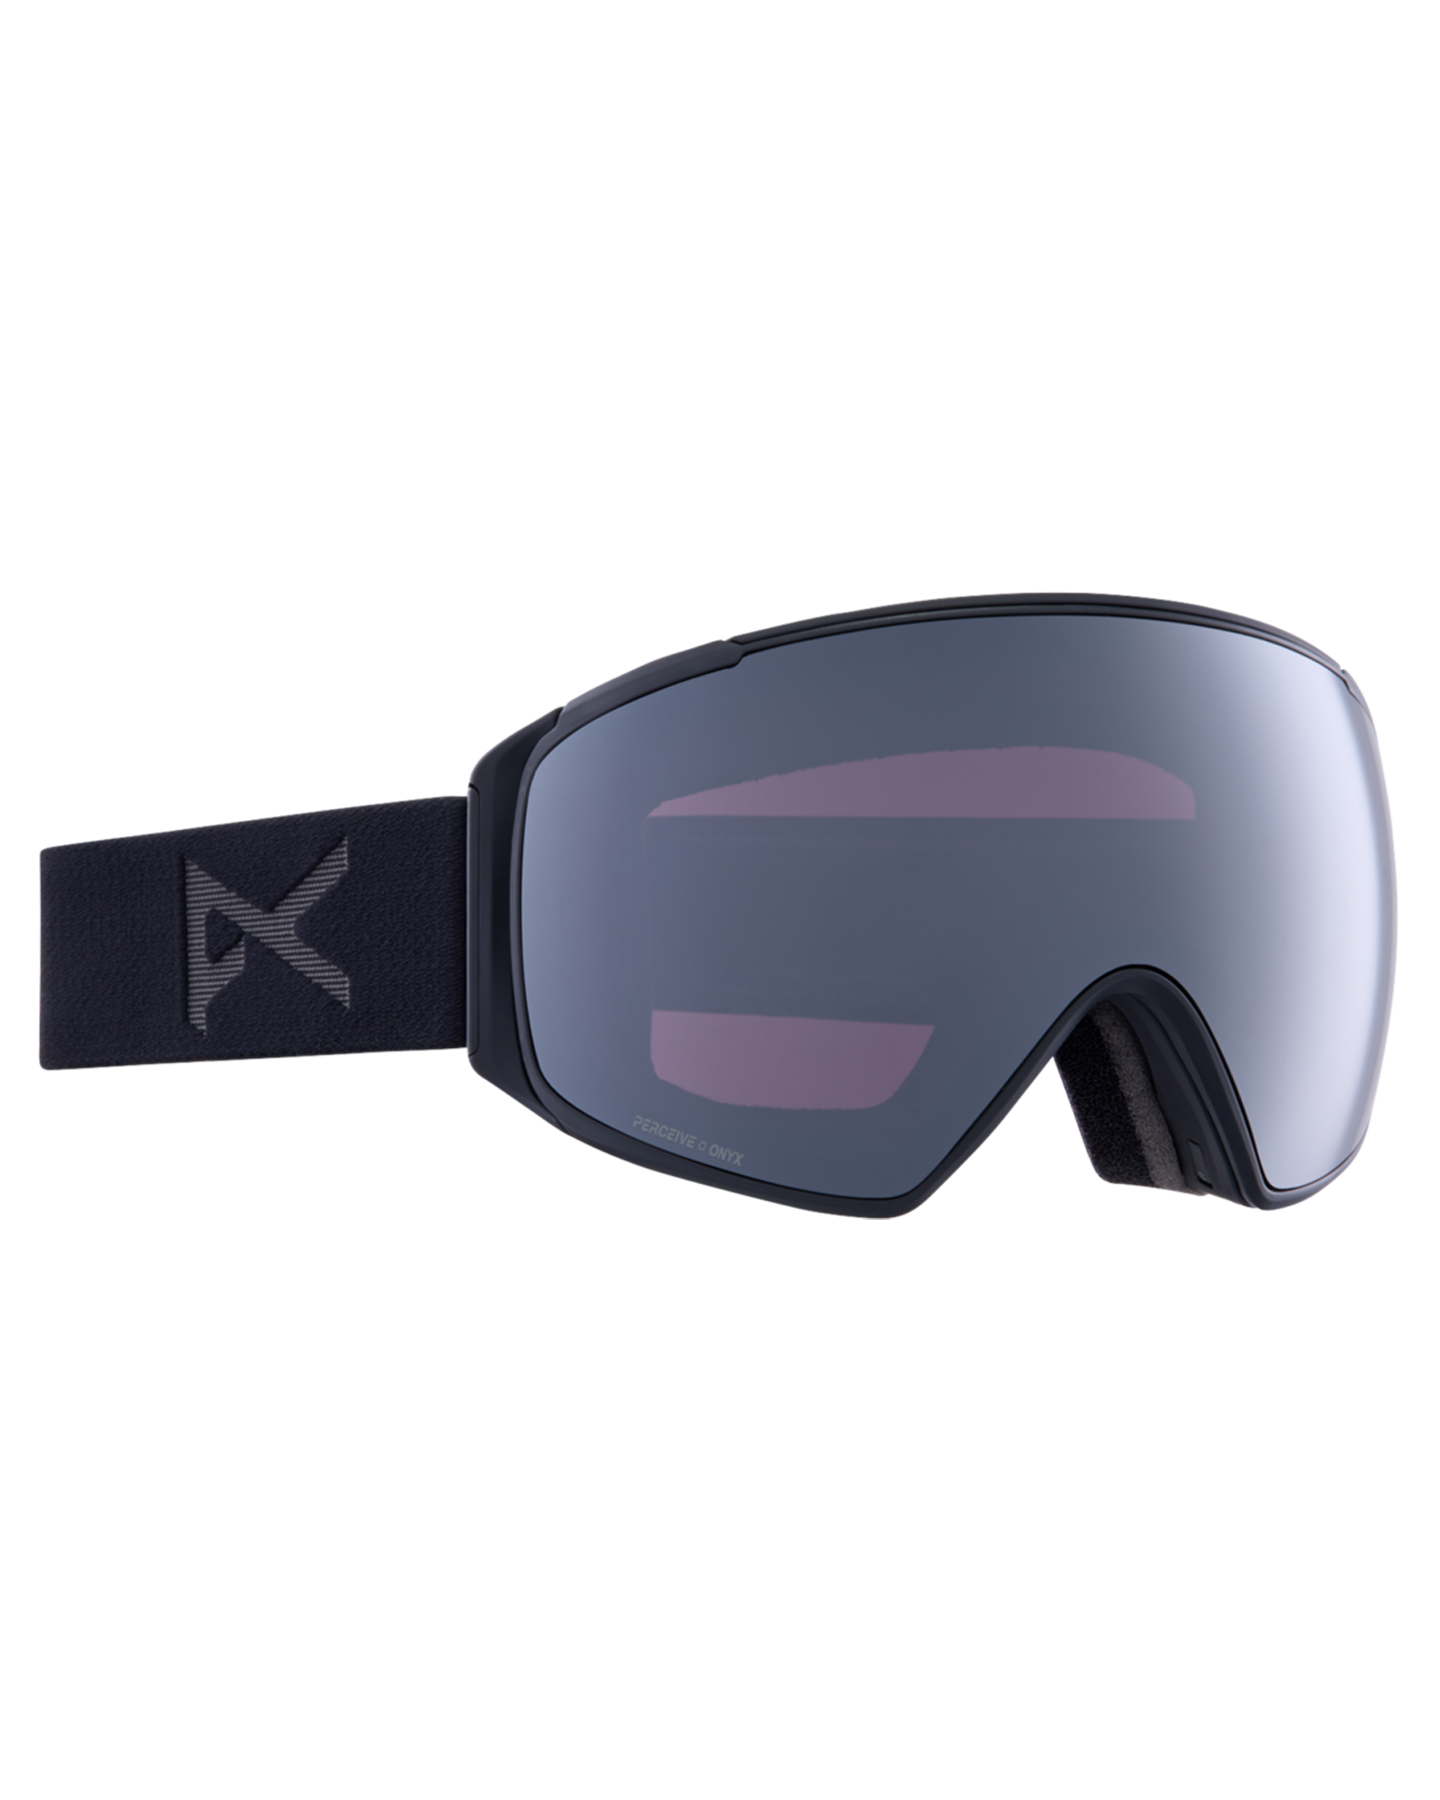 Anon M4S Toric Low Bridge Fit Snow Goggles + Bonus Lens + MFI - Smoke / Perceive Sunny Onyx Men's Snow Goggles - Trojan Wake Ski Snow